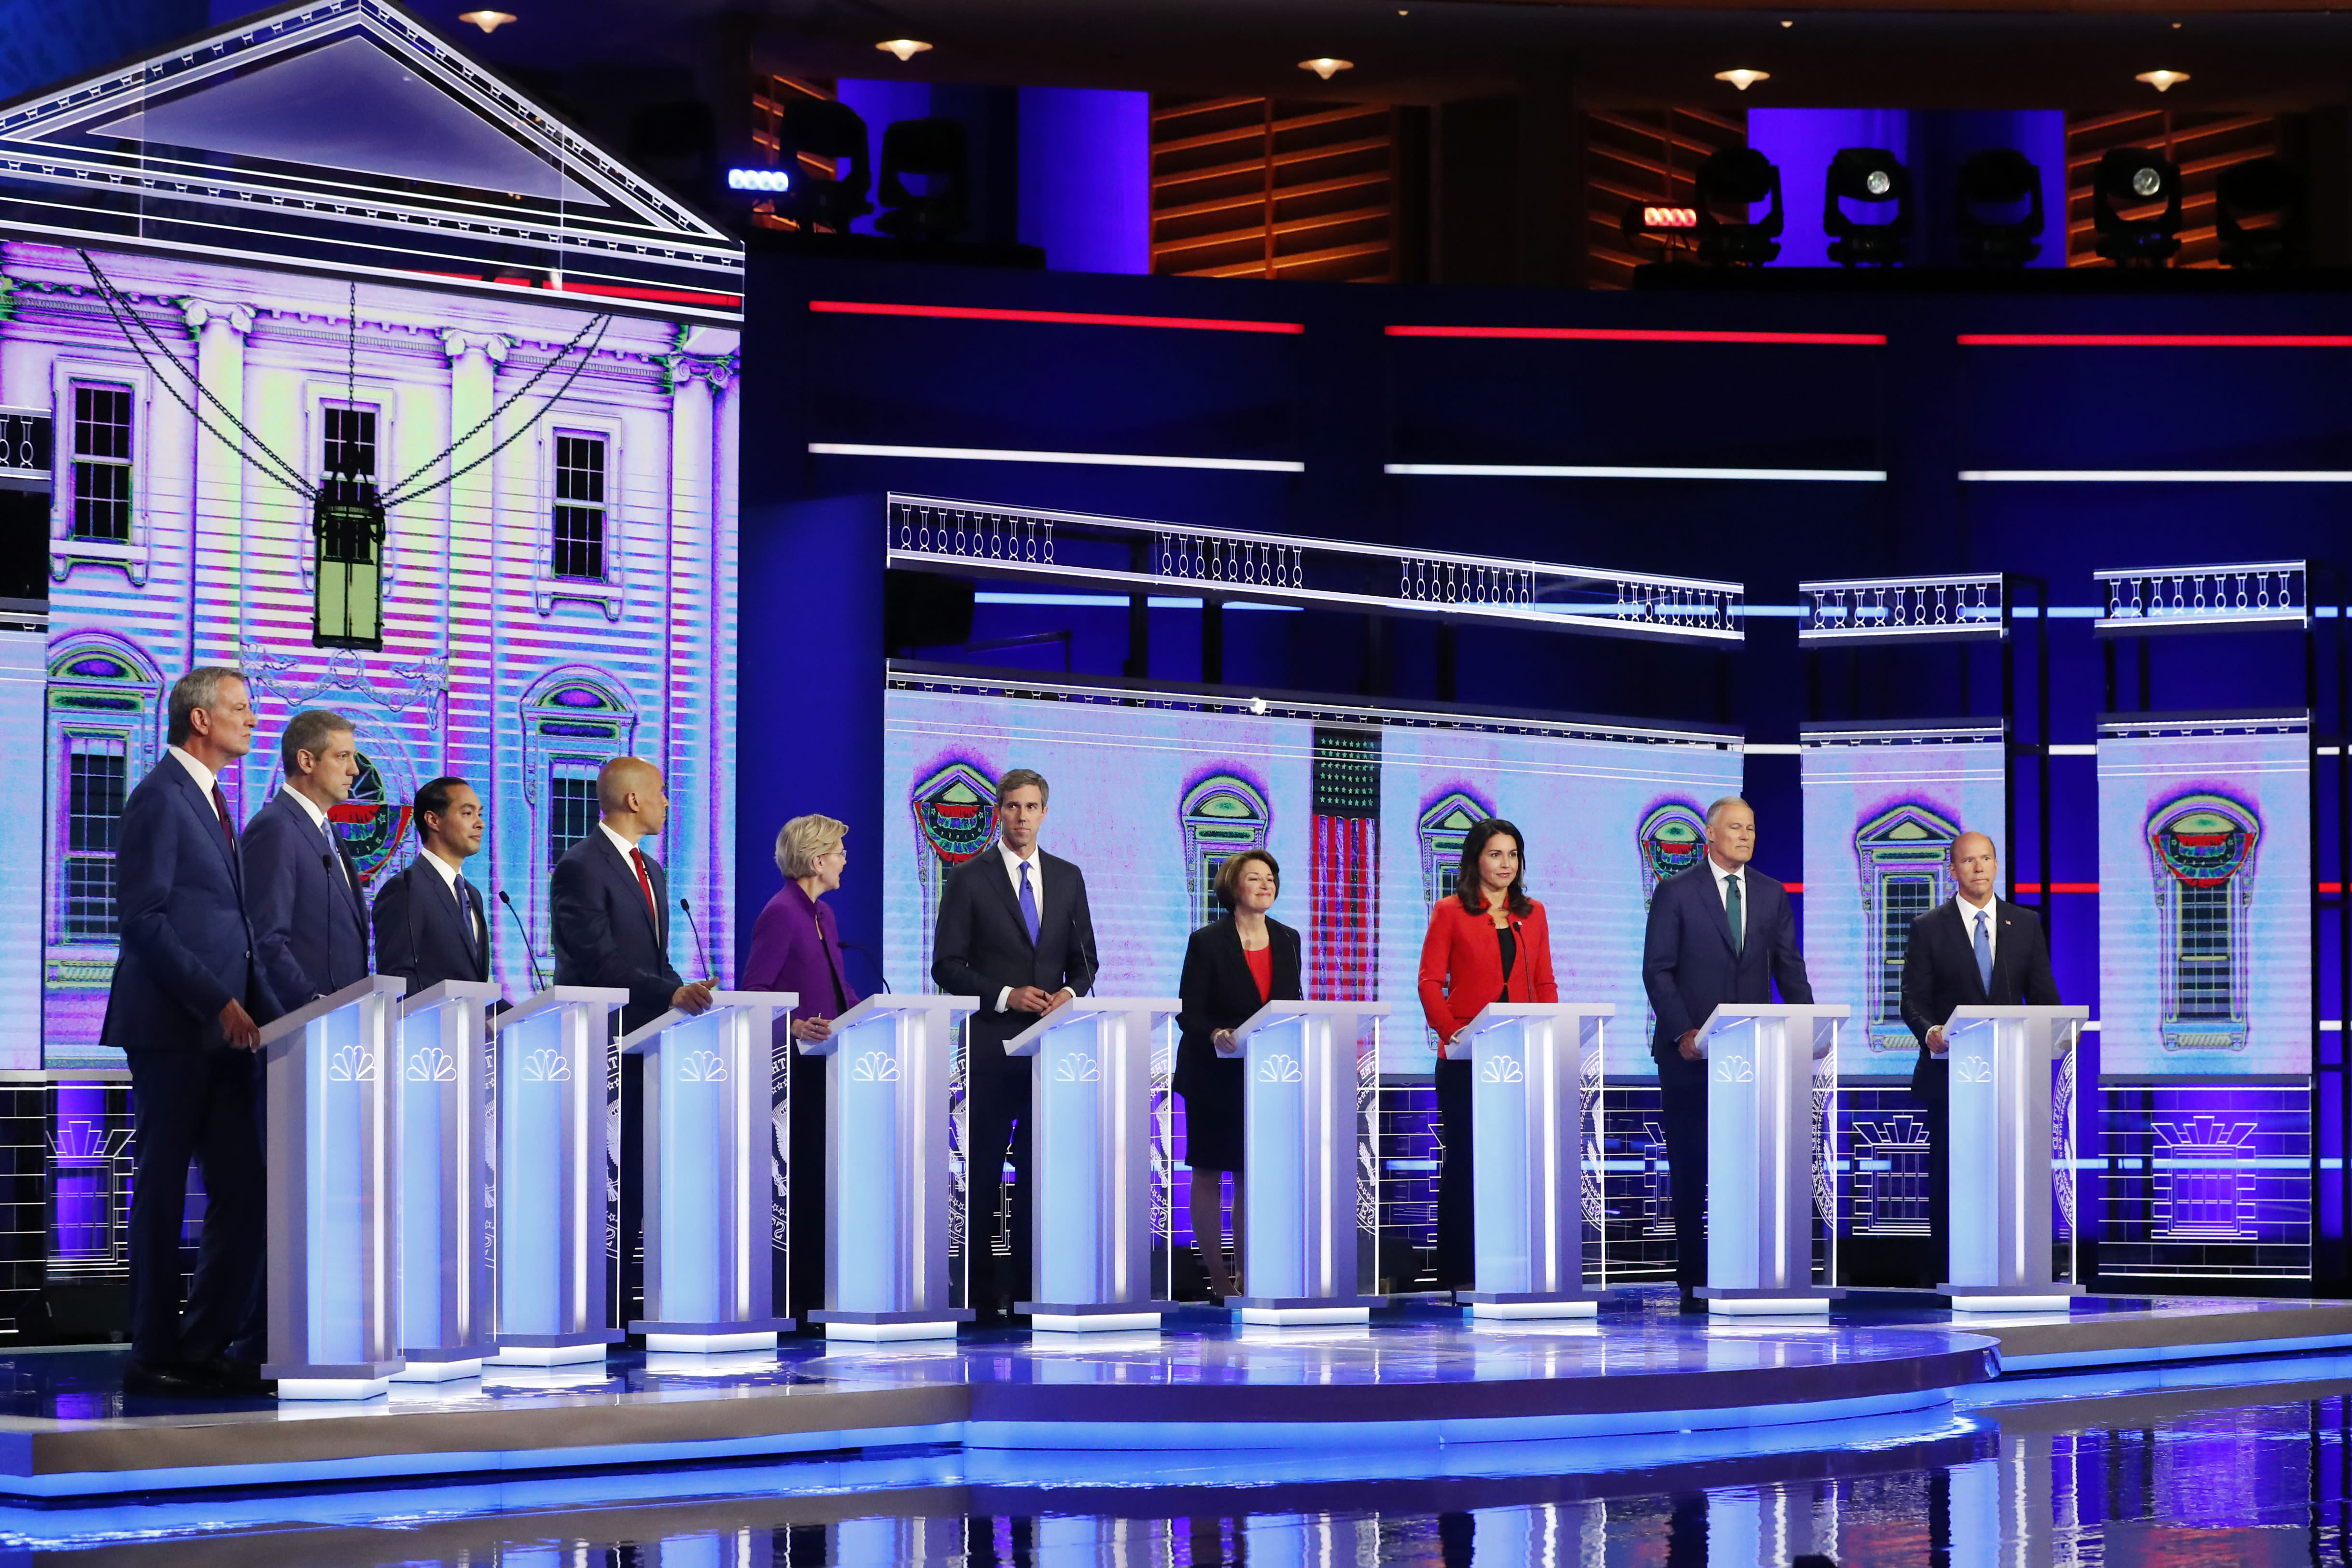 Democratic Debate Night 1 Gets 15.3M Viewers Across NBC, MSNBC